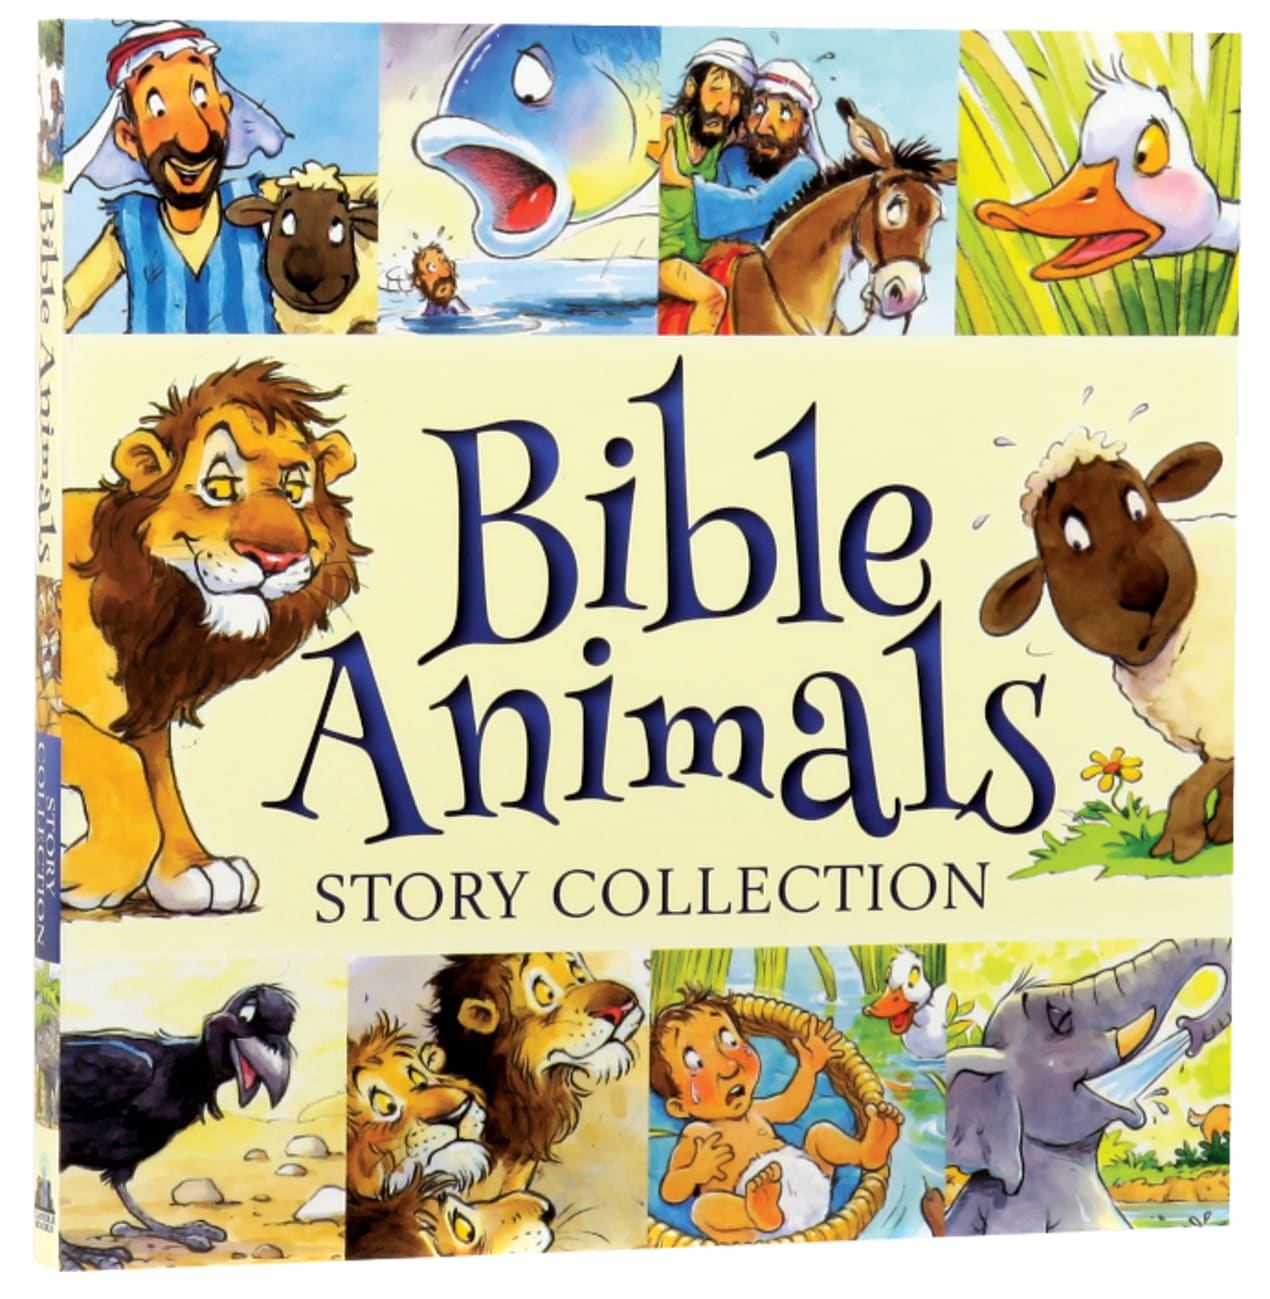 Bible Animals Story Collection by Steve Smallman (Illus) | Koorong